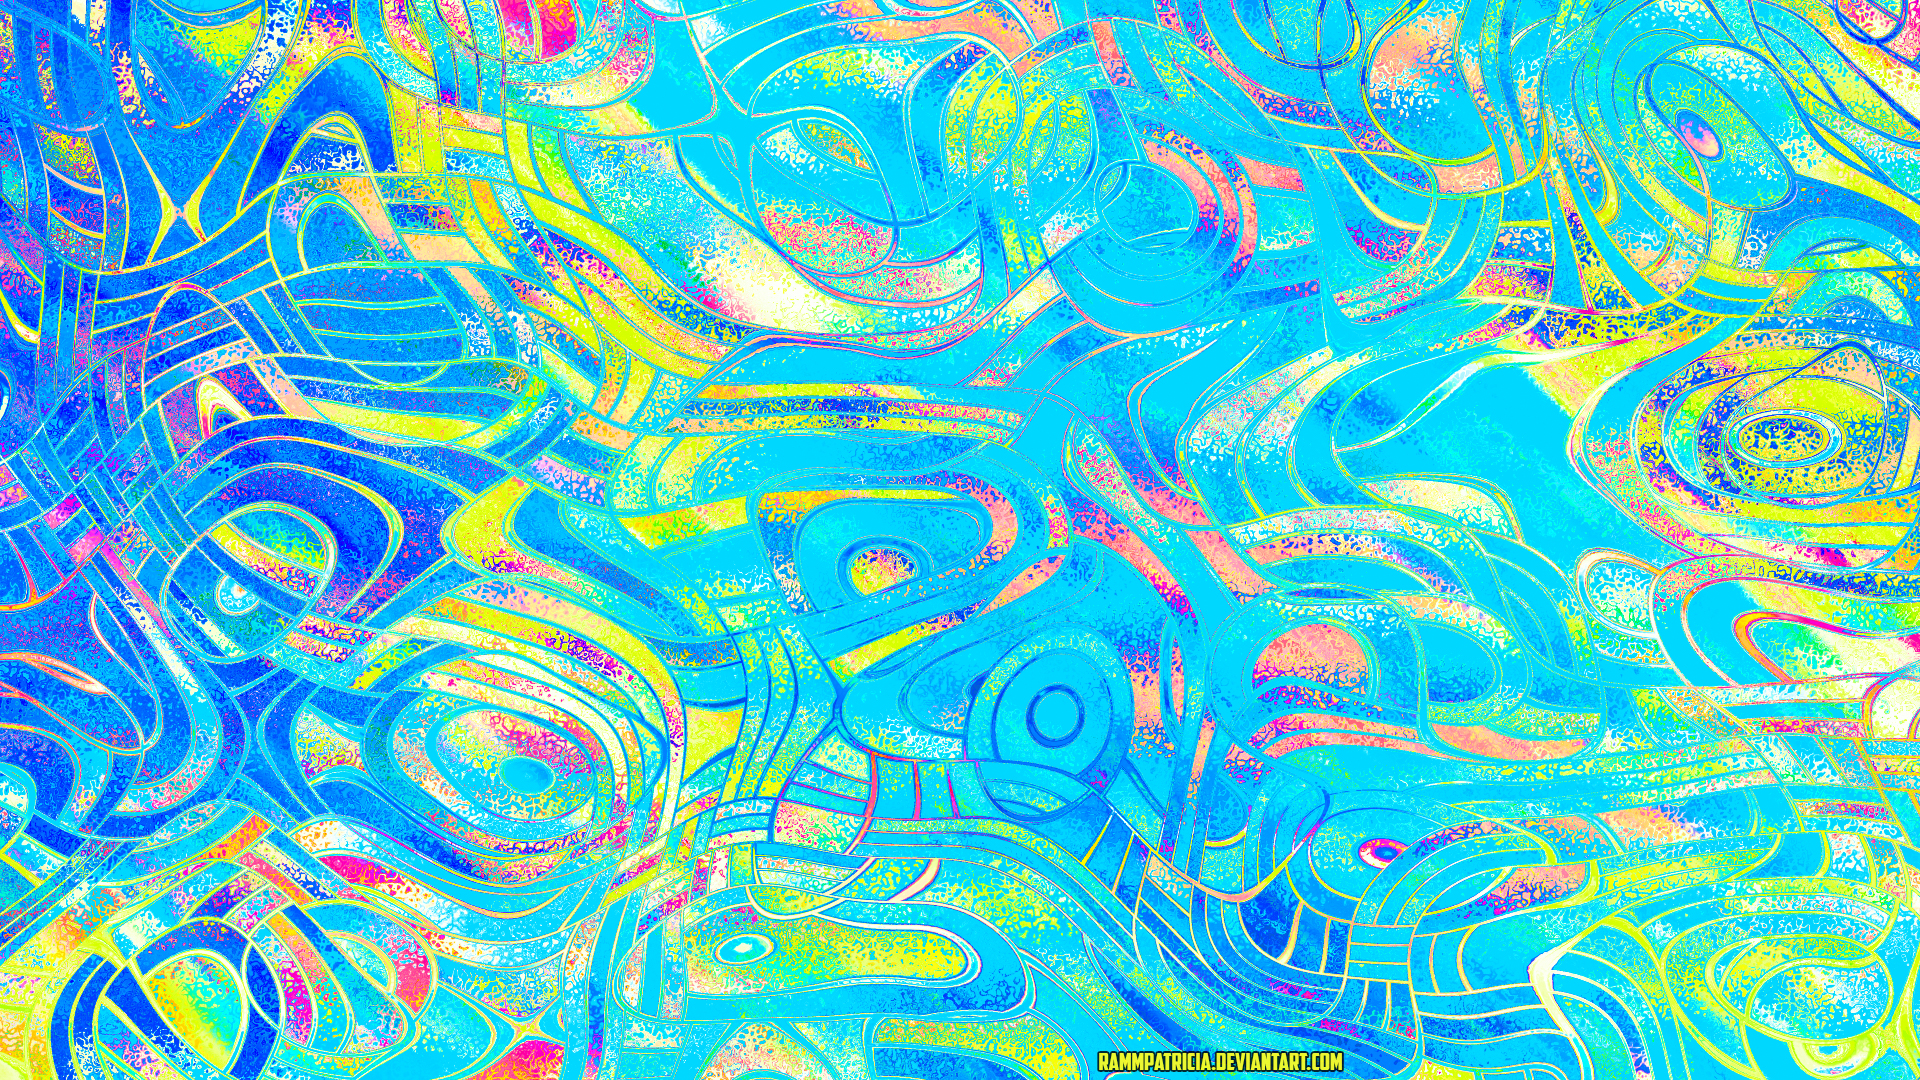 General 1920x1080 RammPatricia digital art abstract summer cyan